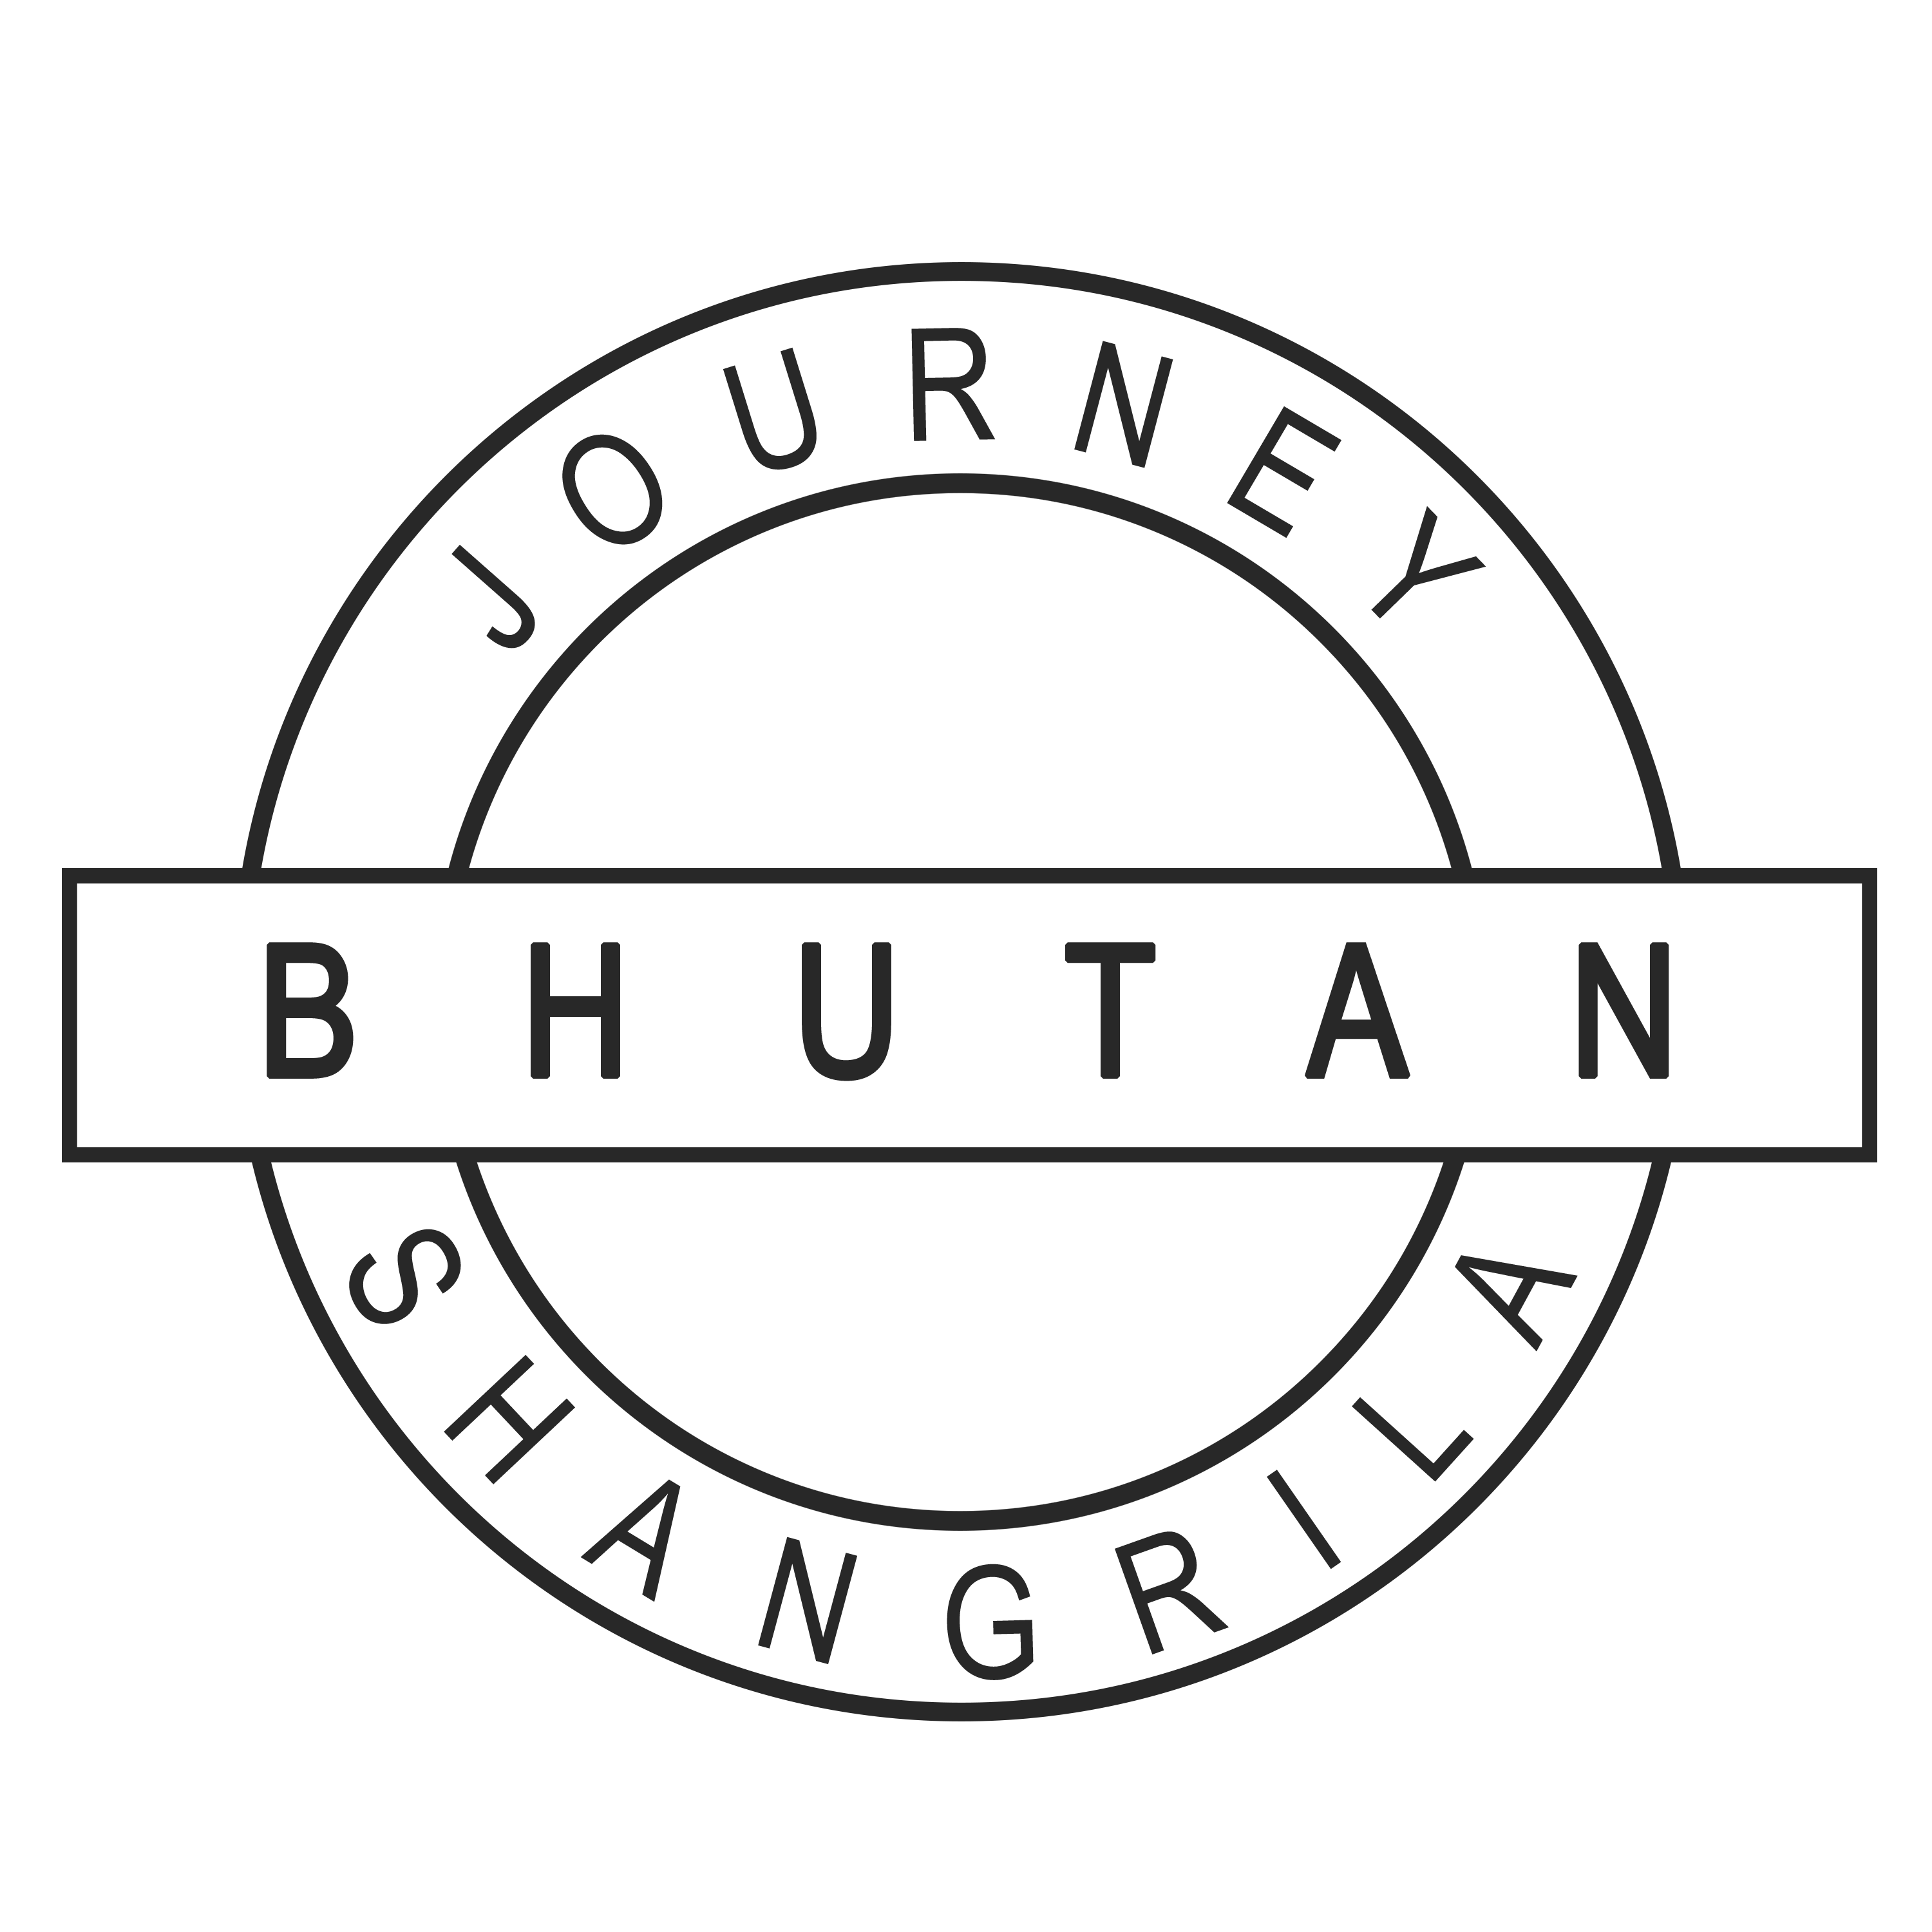 GETTING INTO BHUTAN